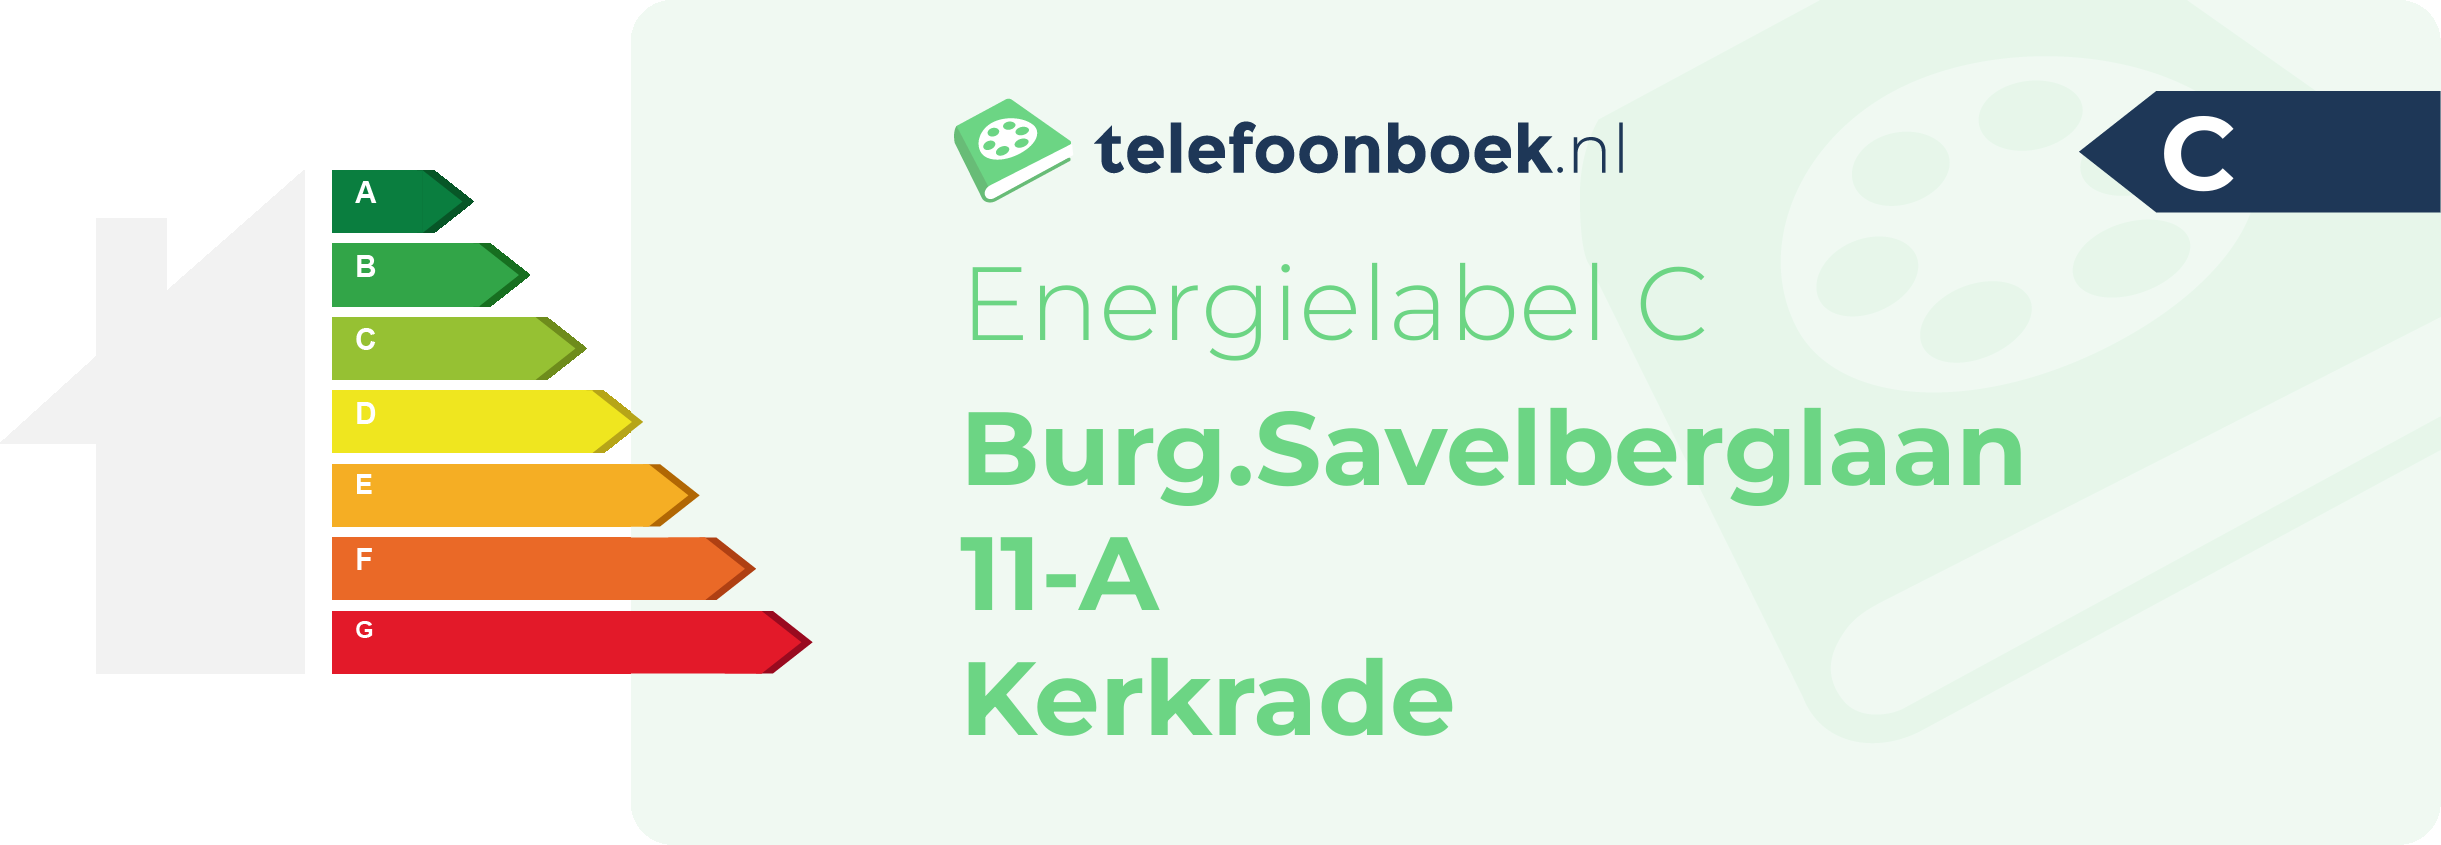 Energielabel Burg.Savelberglaan 11-A Kerkrade